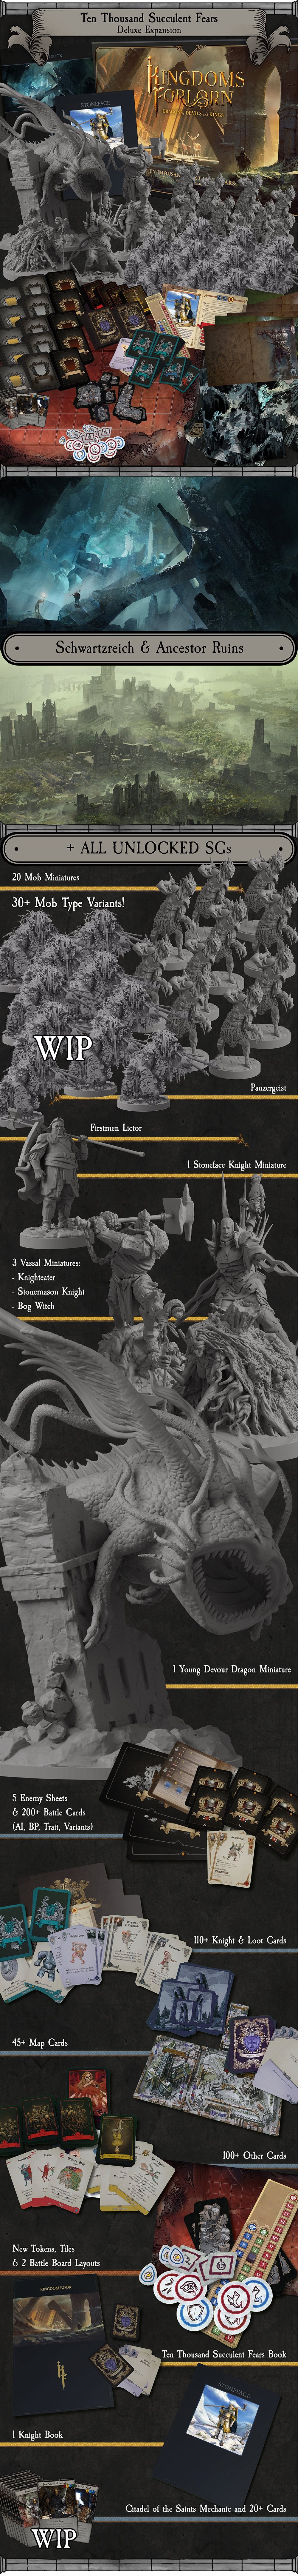 Kingdoms Forlorn: Dragons, Devils and Kings Elite Pledge + Stretchgoals + KS Exclusive English